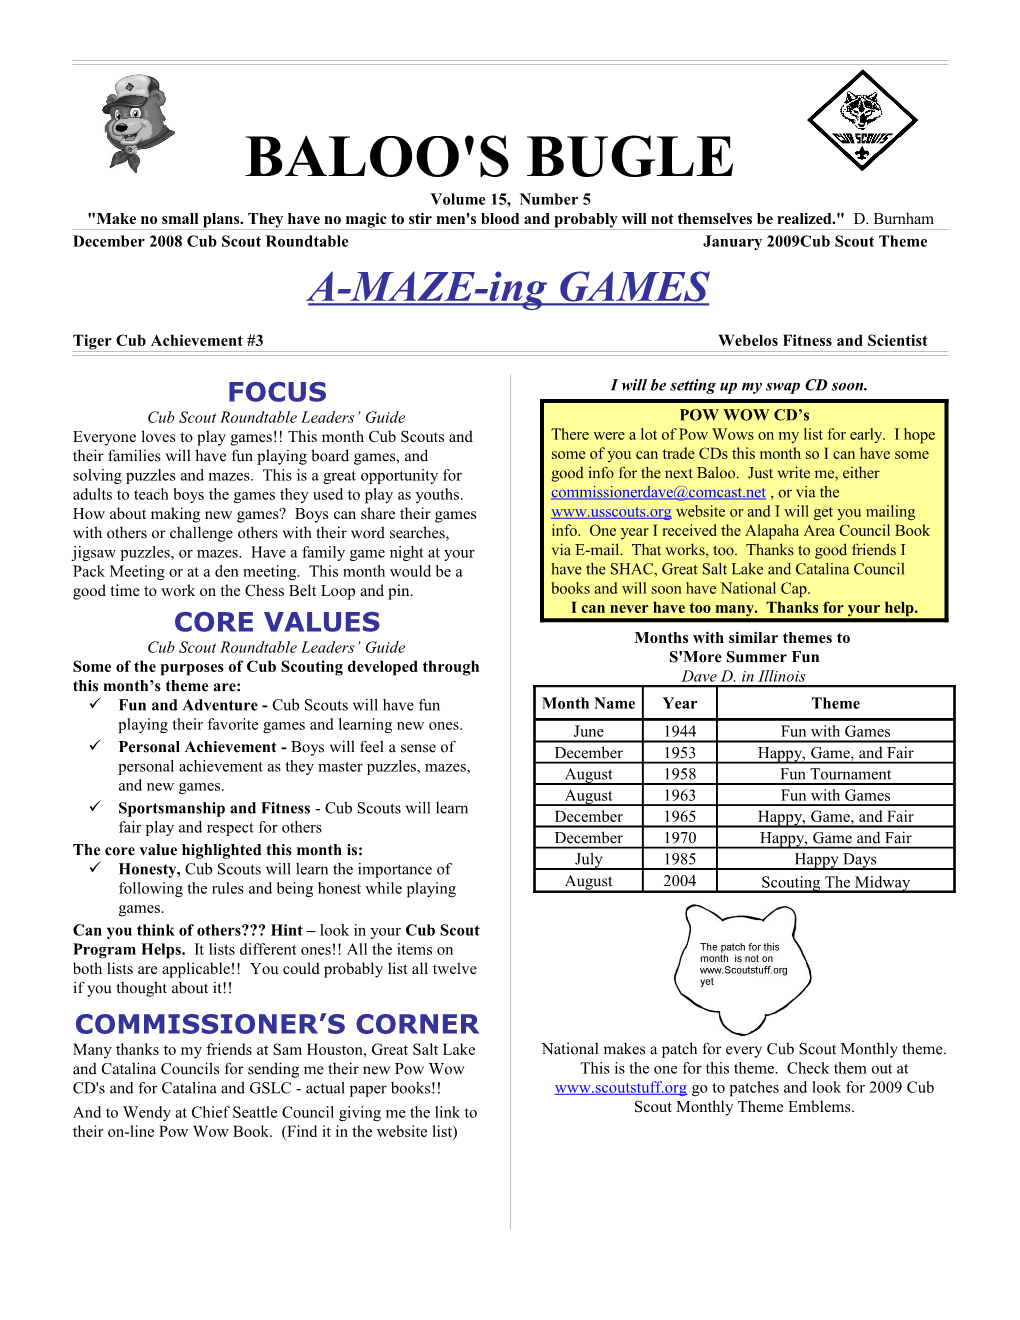 BALOO's BUGLE Page 6